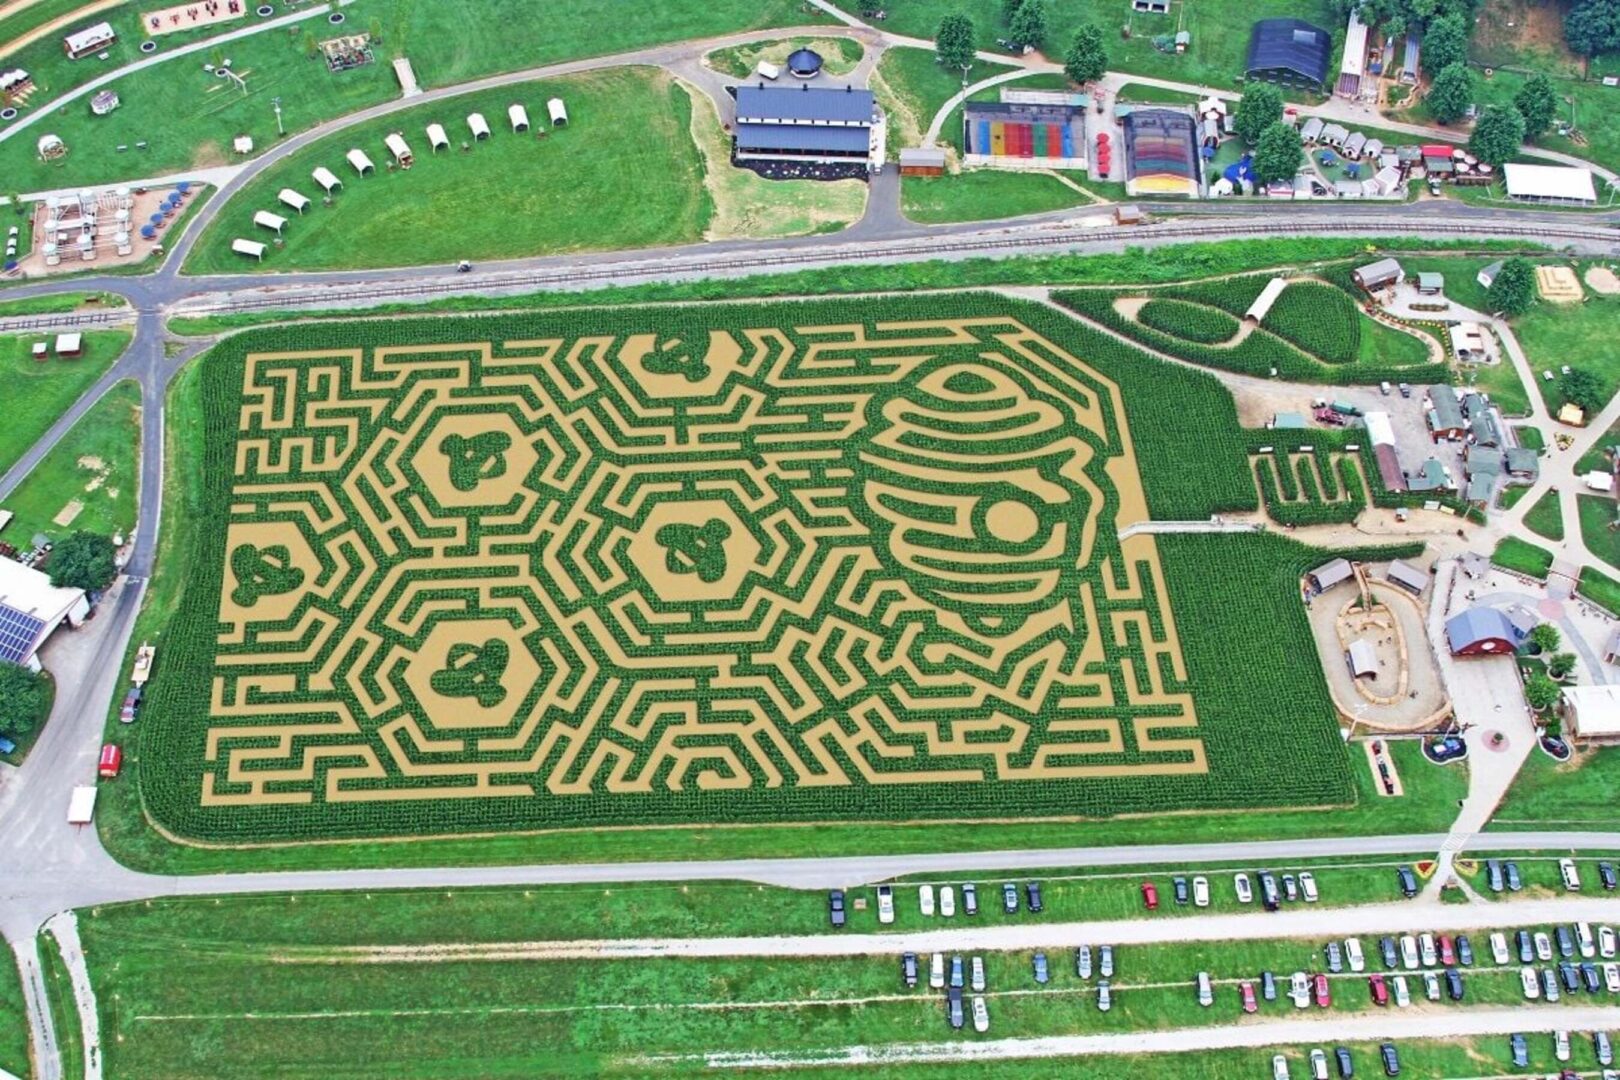 The 2023 corn maze at Cherry Crest Adventure Farm 